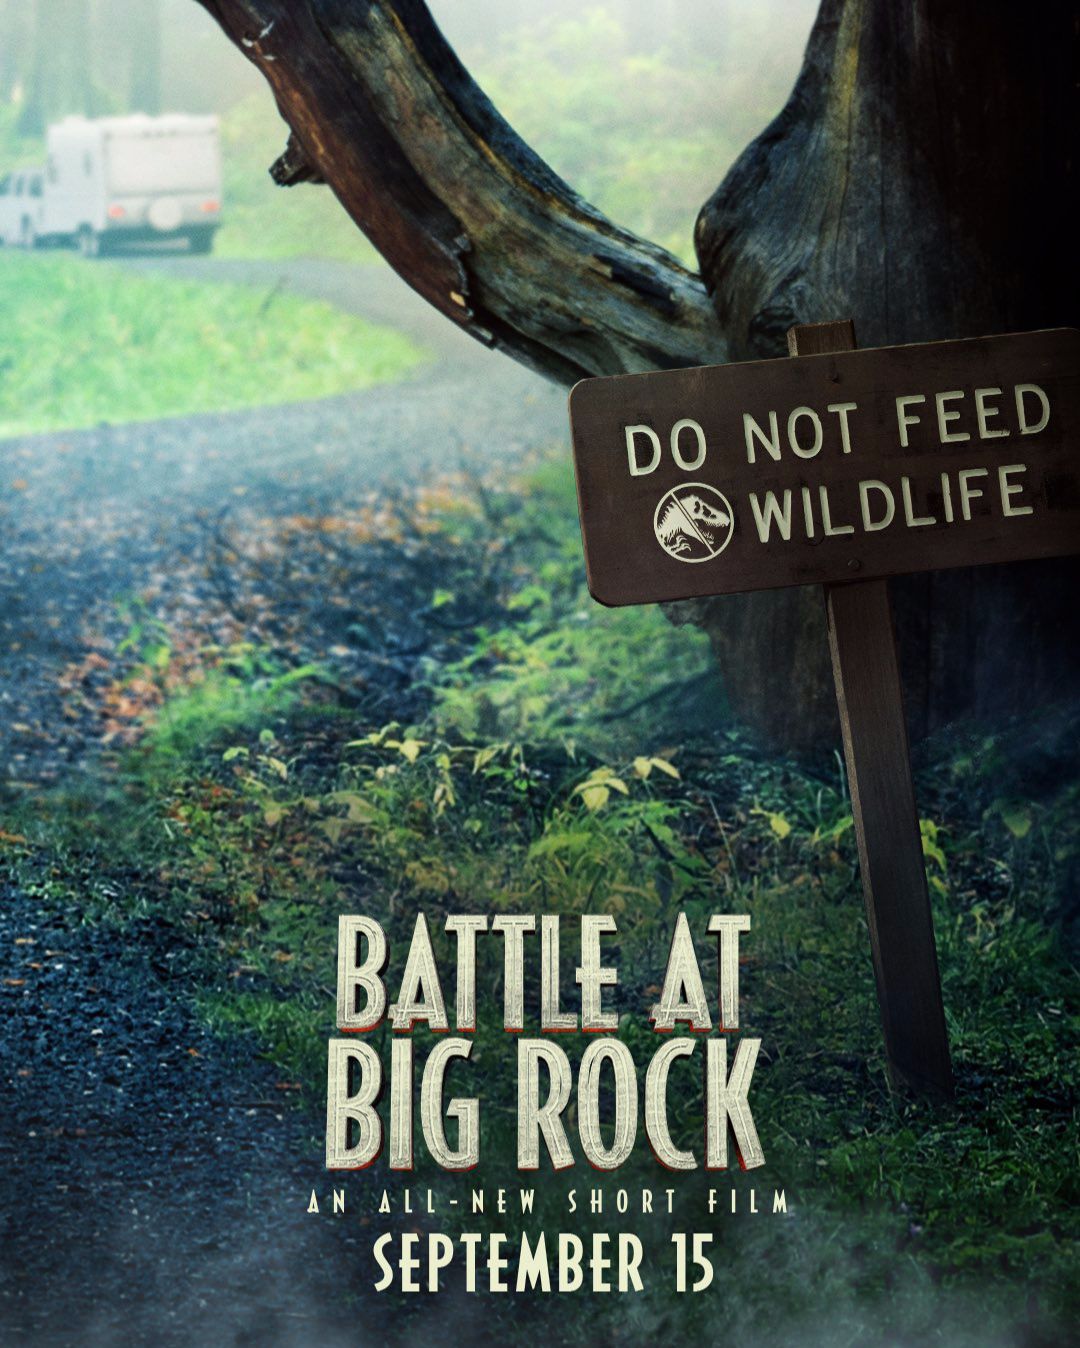 Battle at Big Rock a Jurassic World Short Film poster